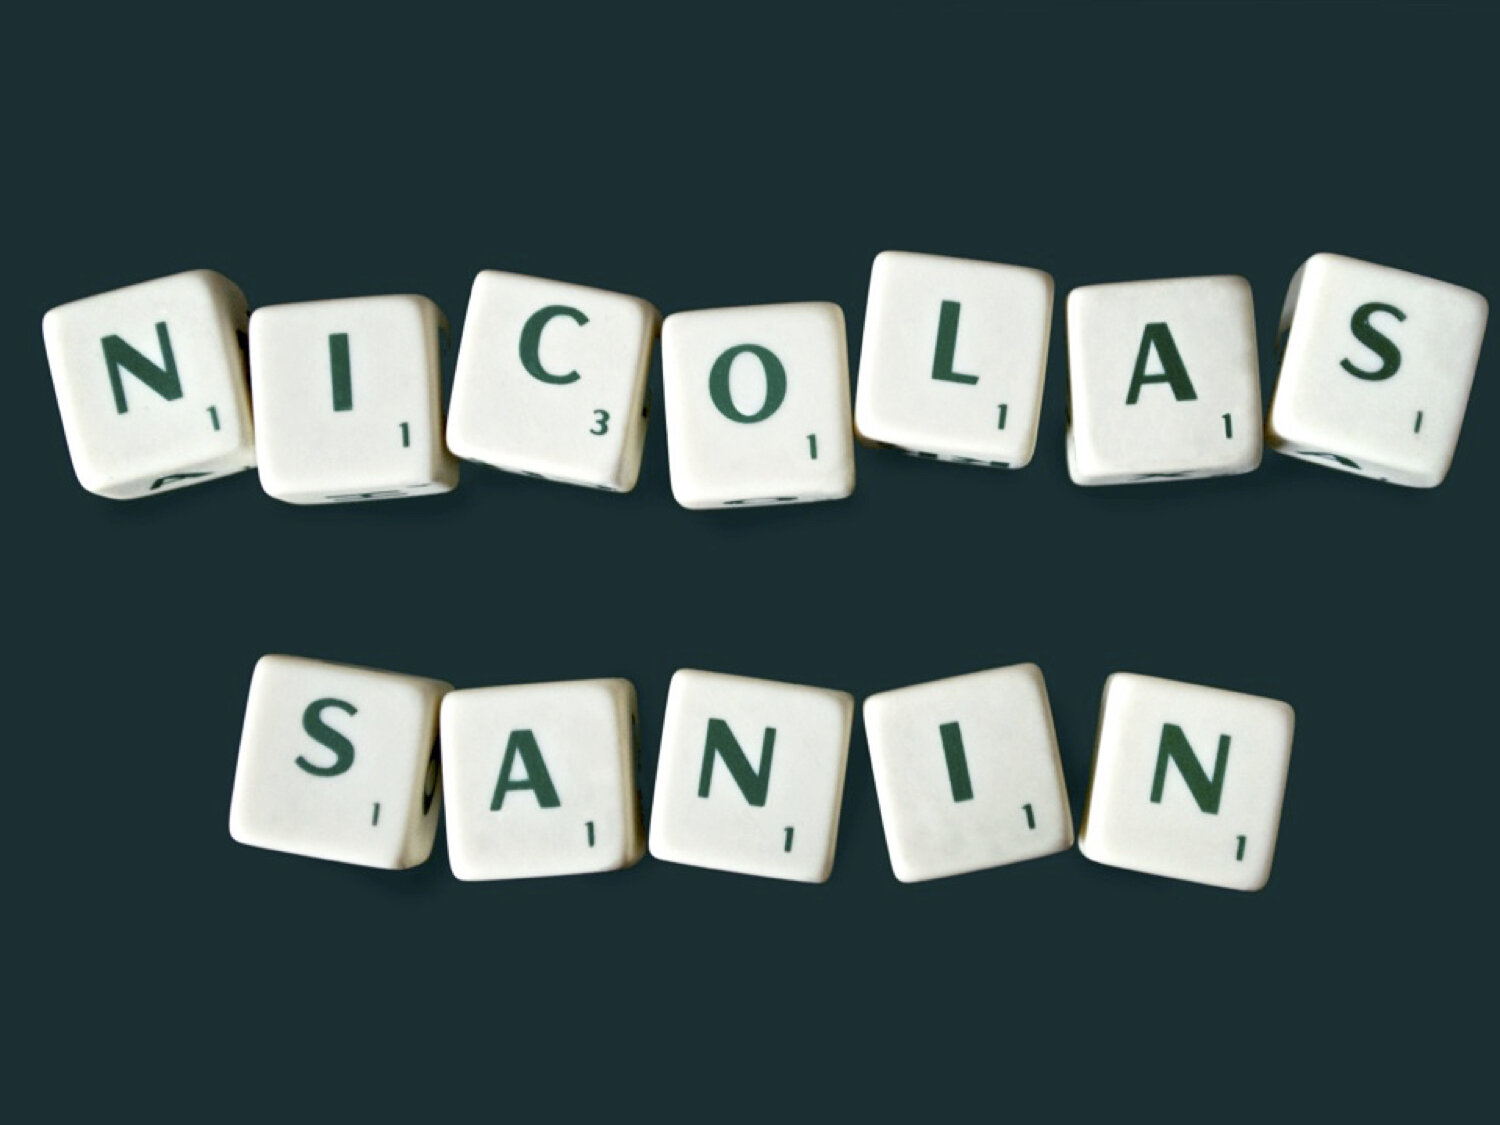 portafolio2016-nicolas-sanin-dados.jpg